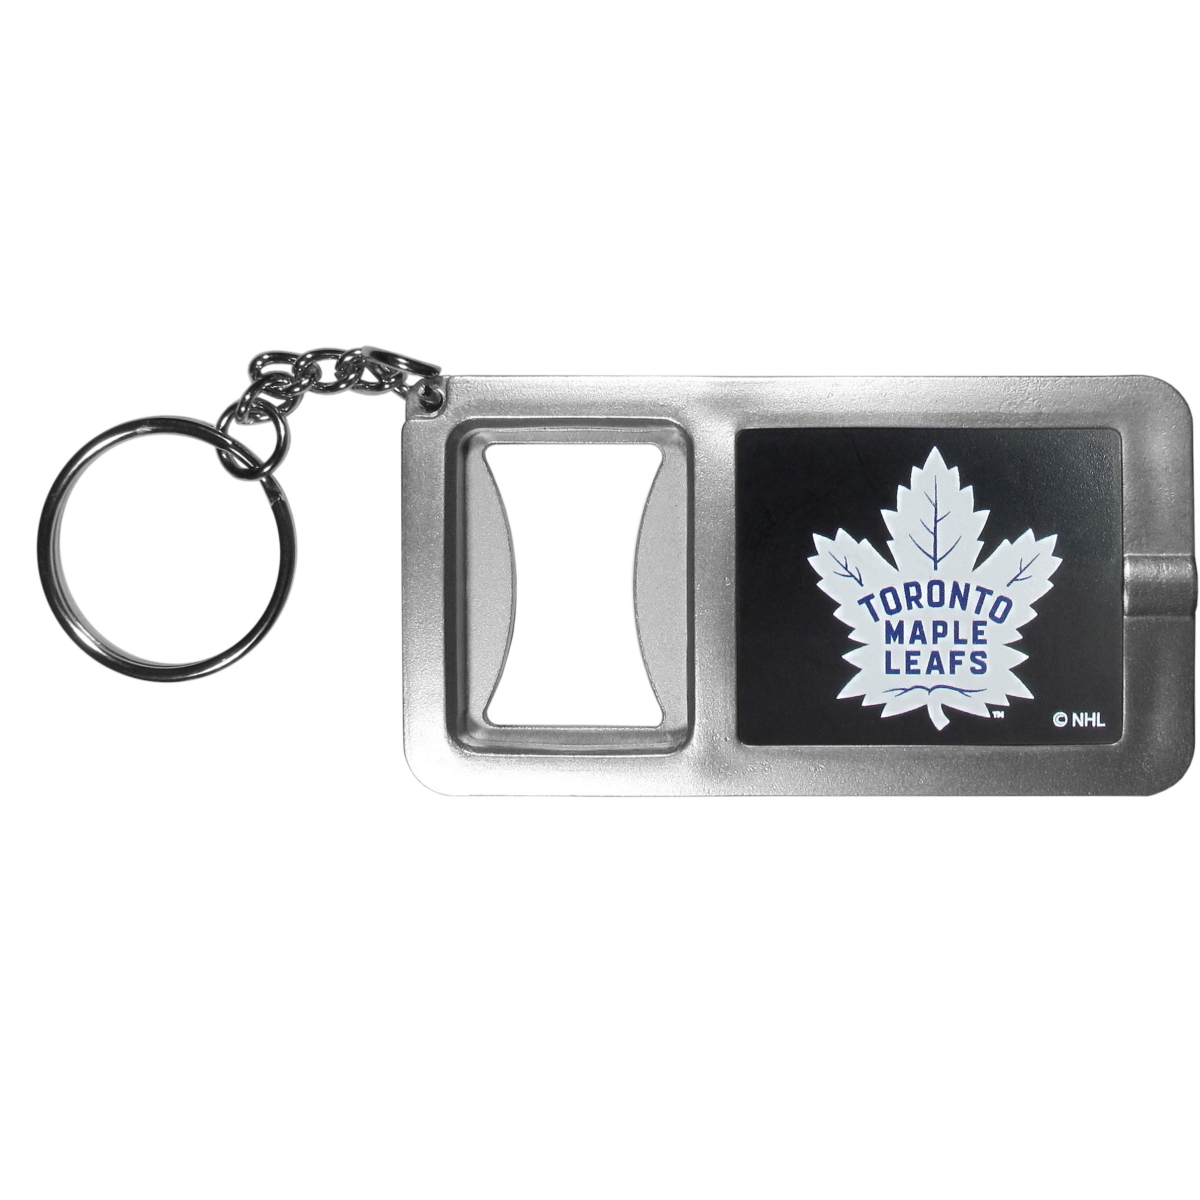 Picture of Siskiyou HFBK85 Unisex NHL Toronto Maple Leafs Flashlight Key Chain with Bottle Opener